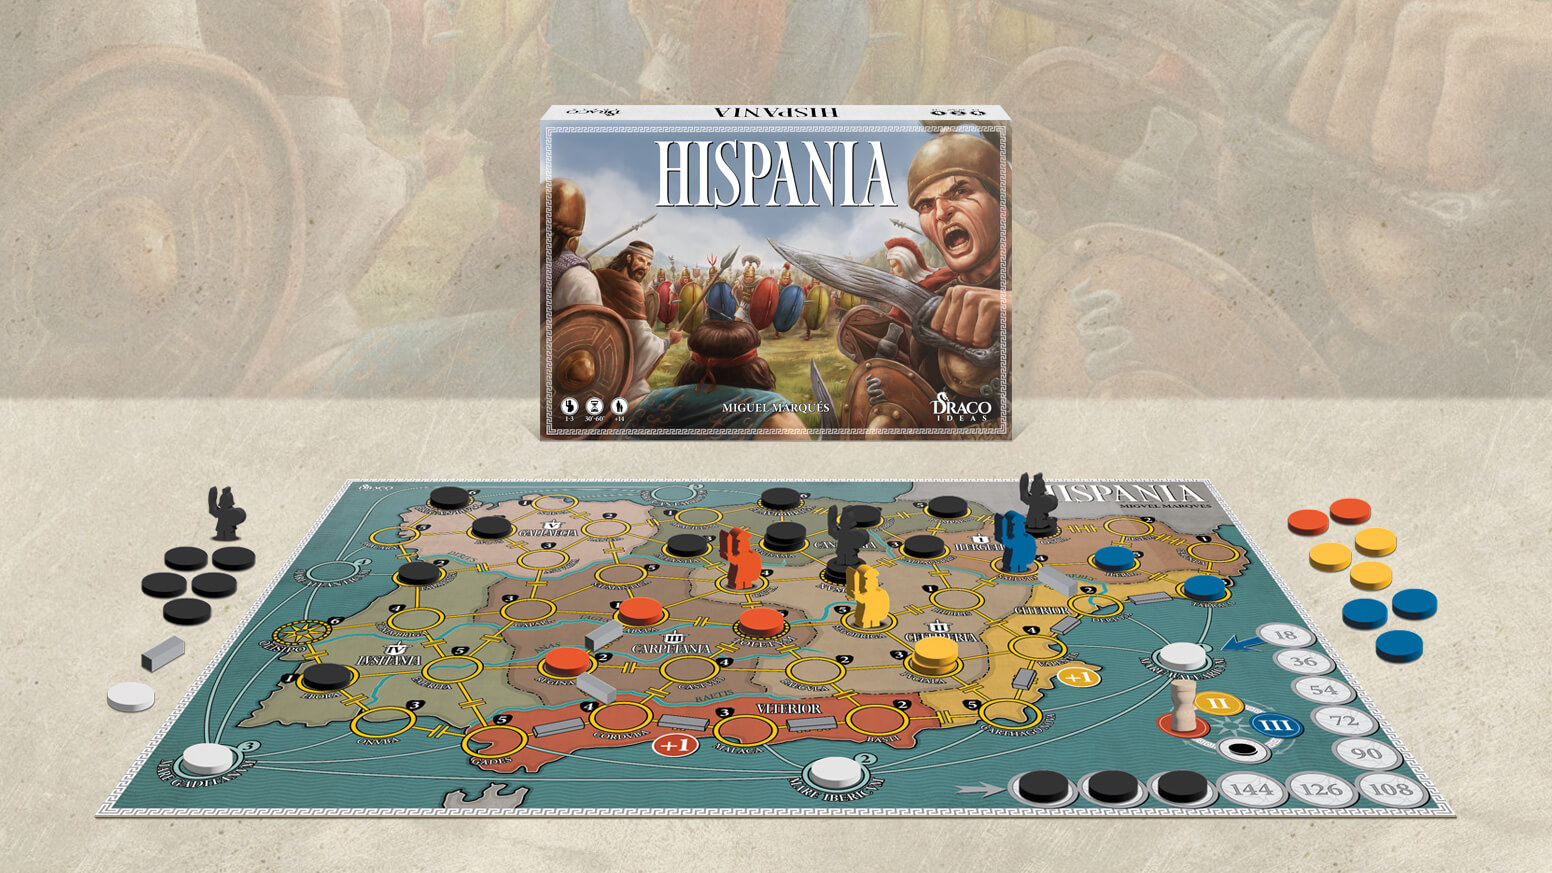 Hispania juego estrategia conquista península iberica miguel marques draco ideas